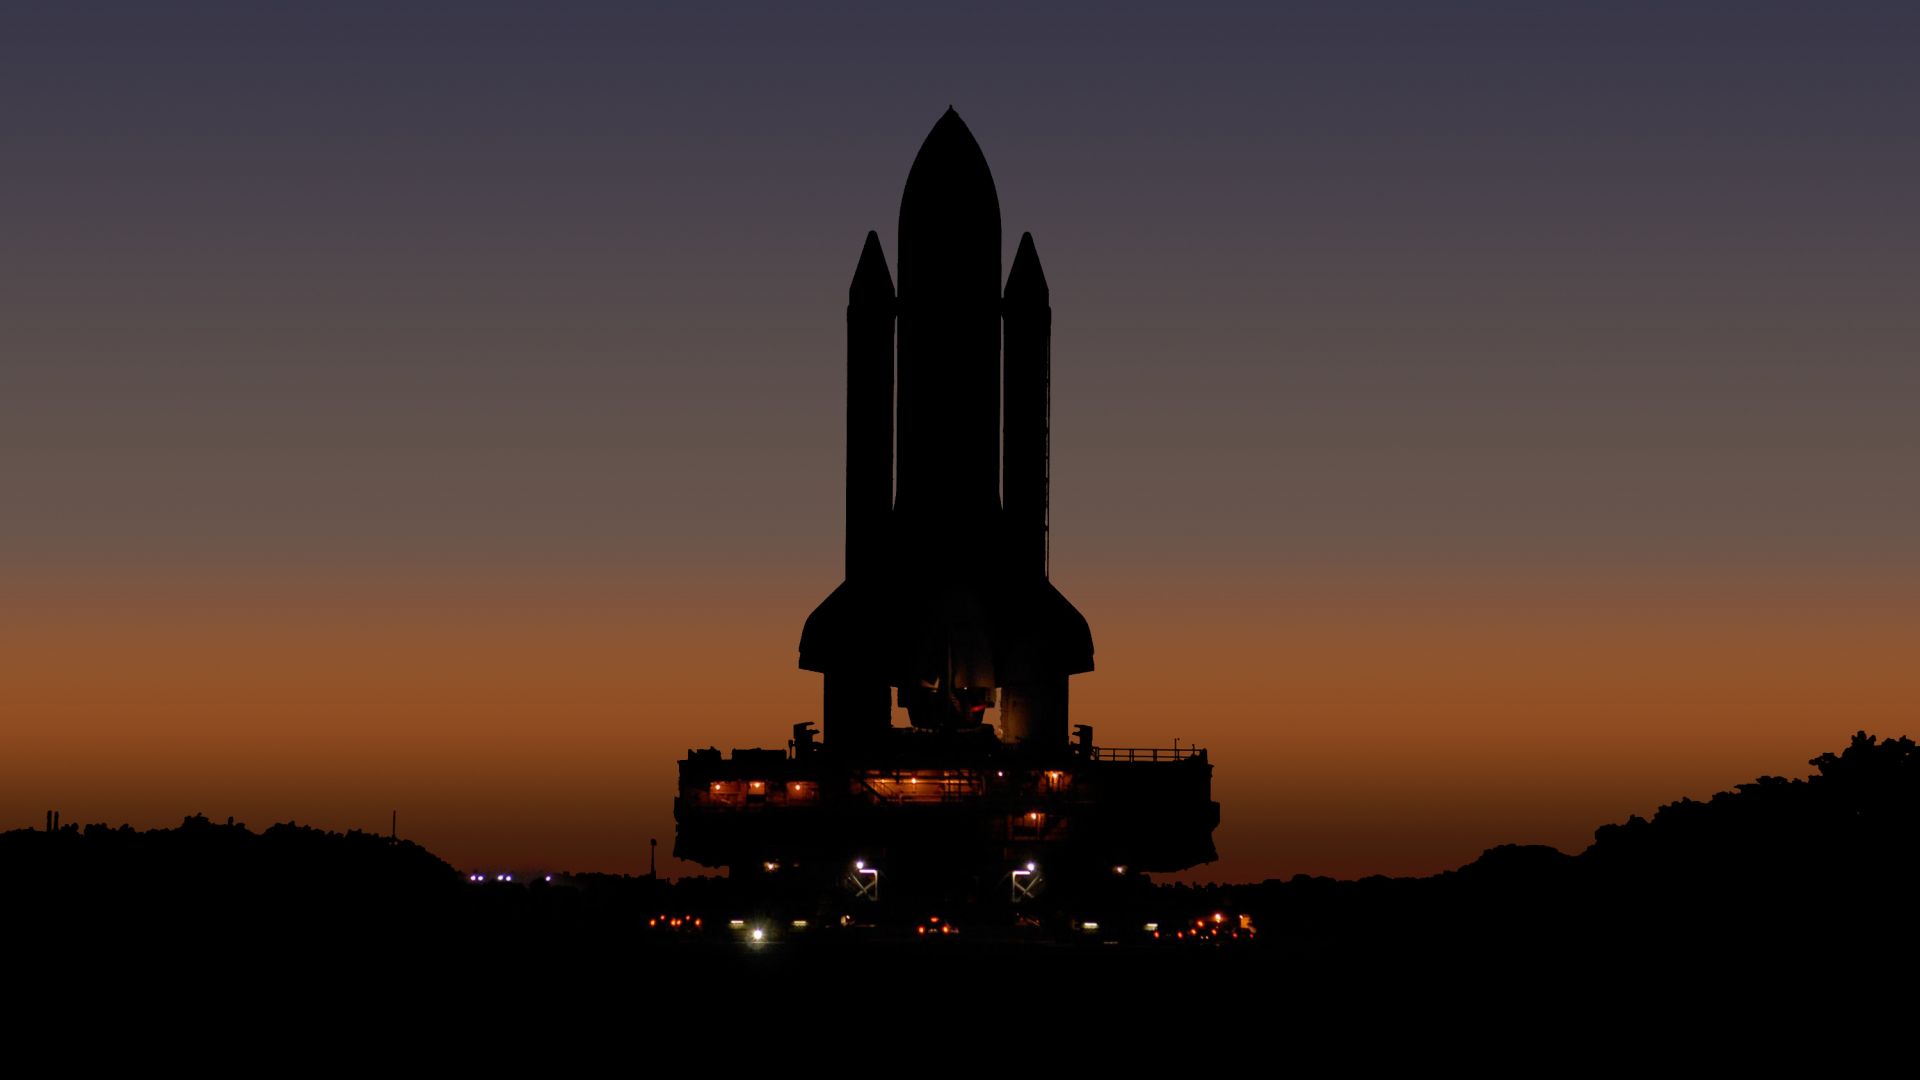 Desktop wallpaper nasa's rocket, sunset, HD image, picture, background, 425c12